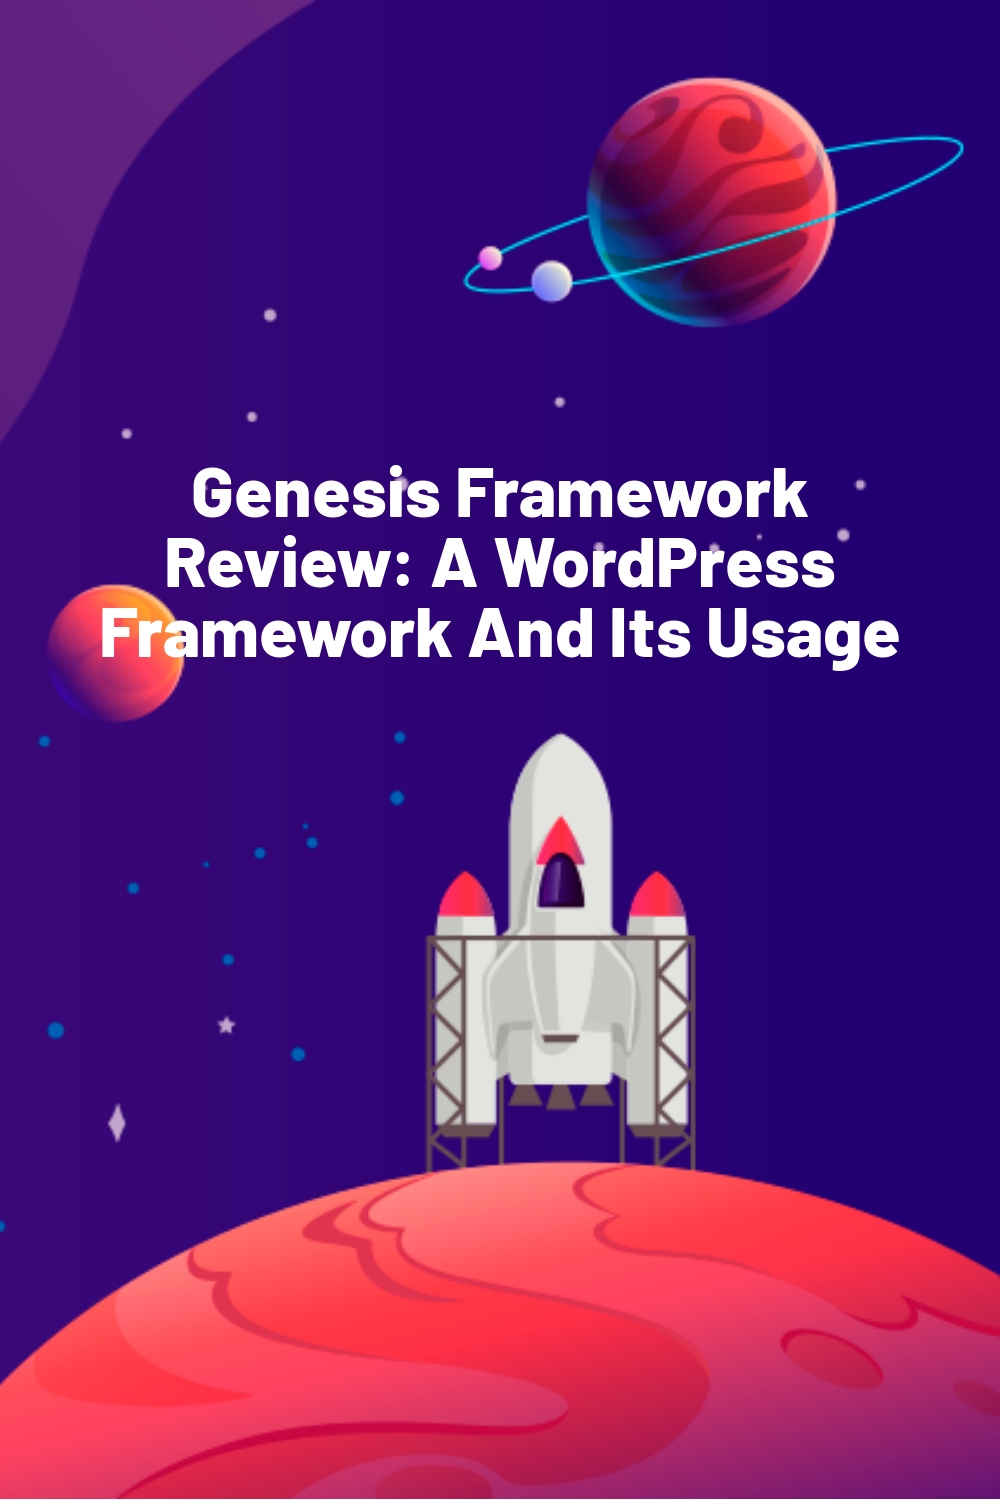 Genesis Framework Review: A WordPress Framework And Its Usage